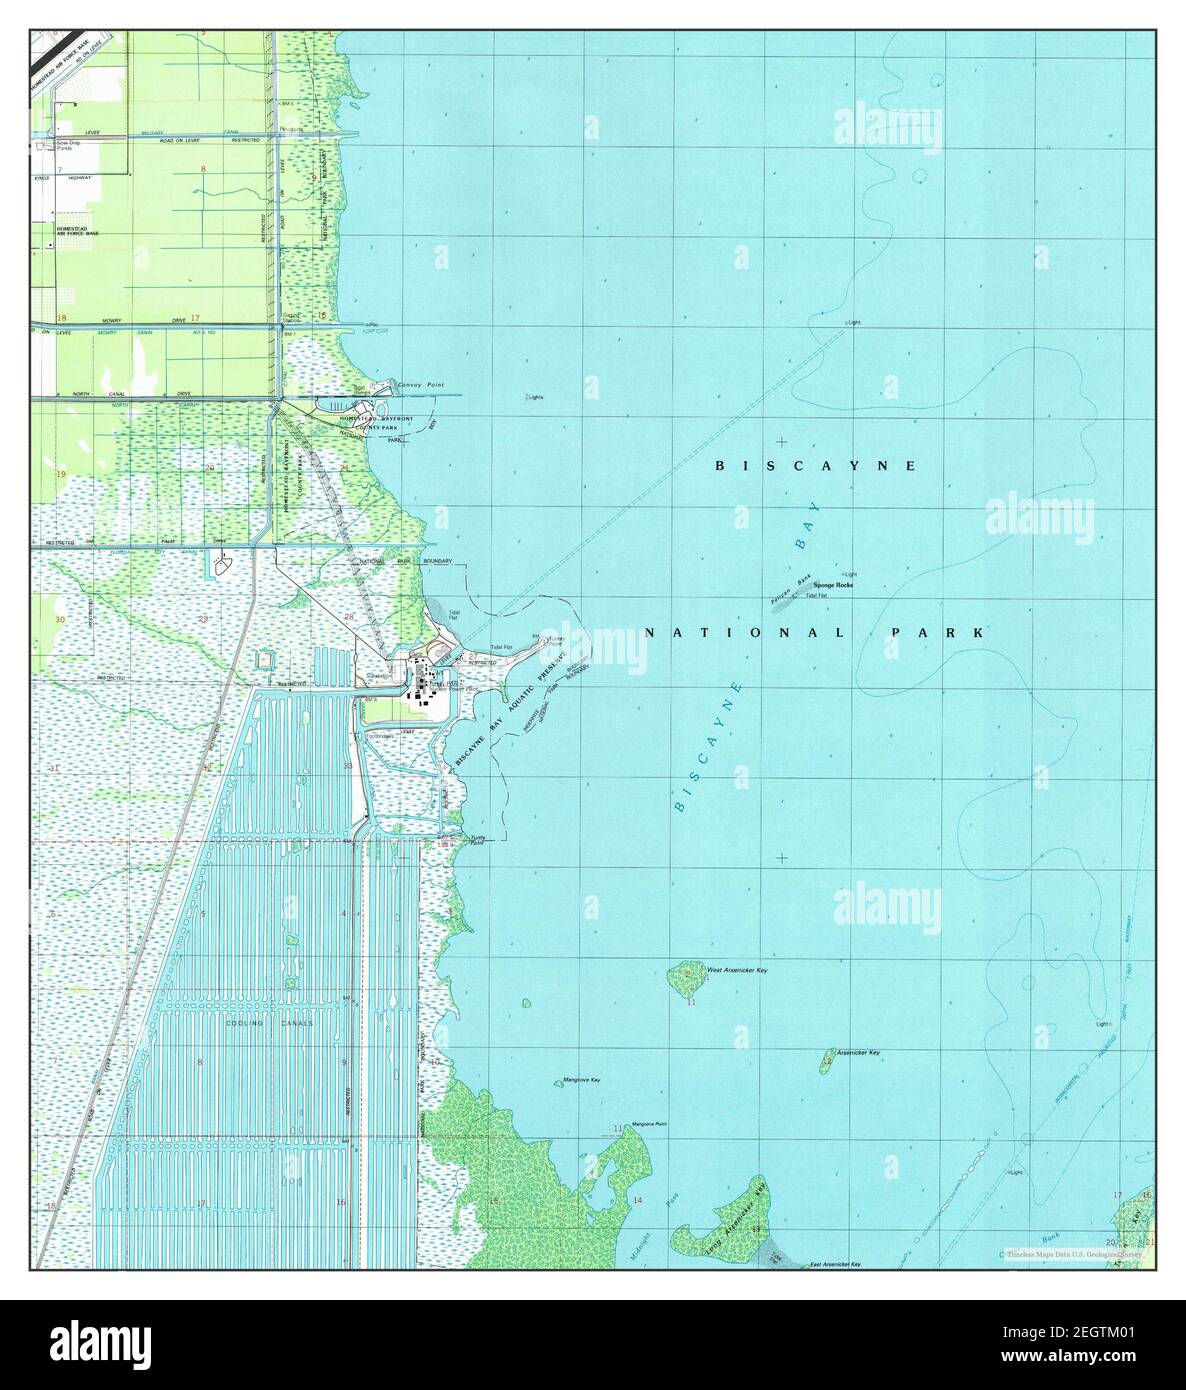 Arsenicker Keys, Florida, map 1997, 1:24000, United States of America by Timeless Maps, data U.S. Geological Survey Stock Photo